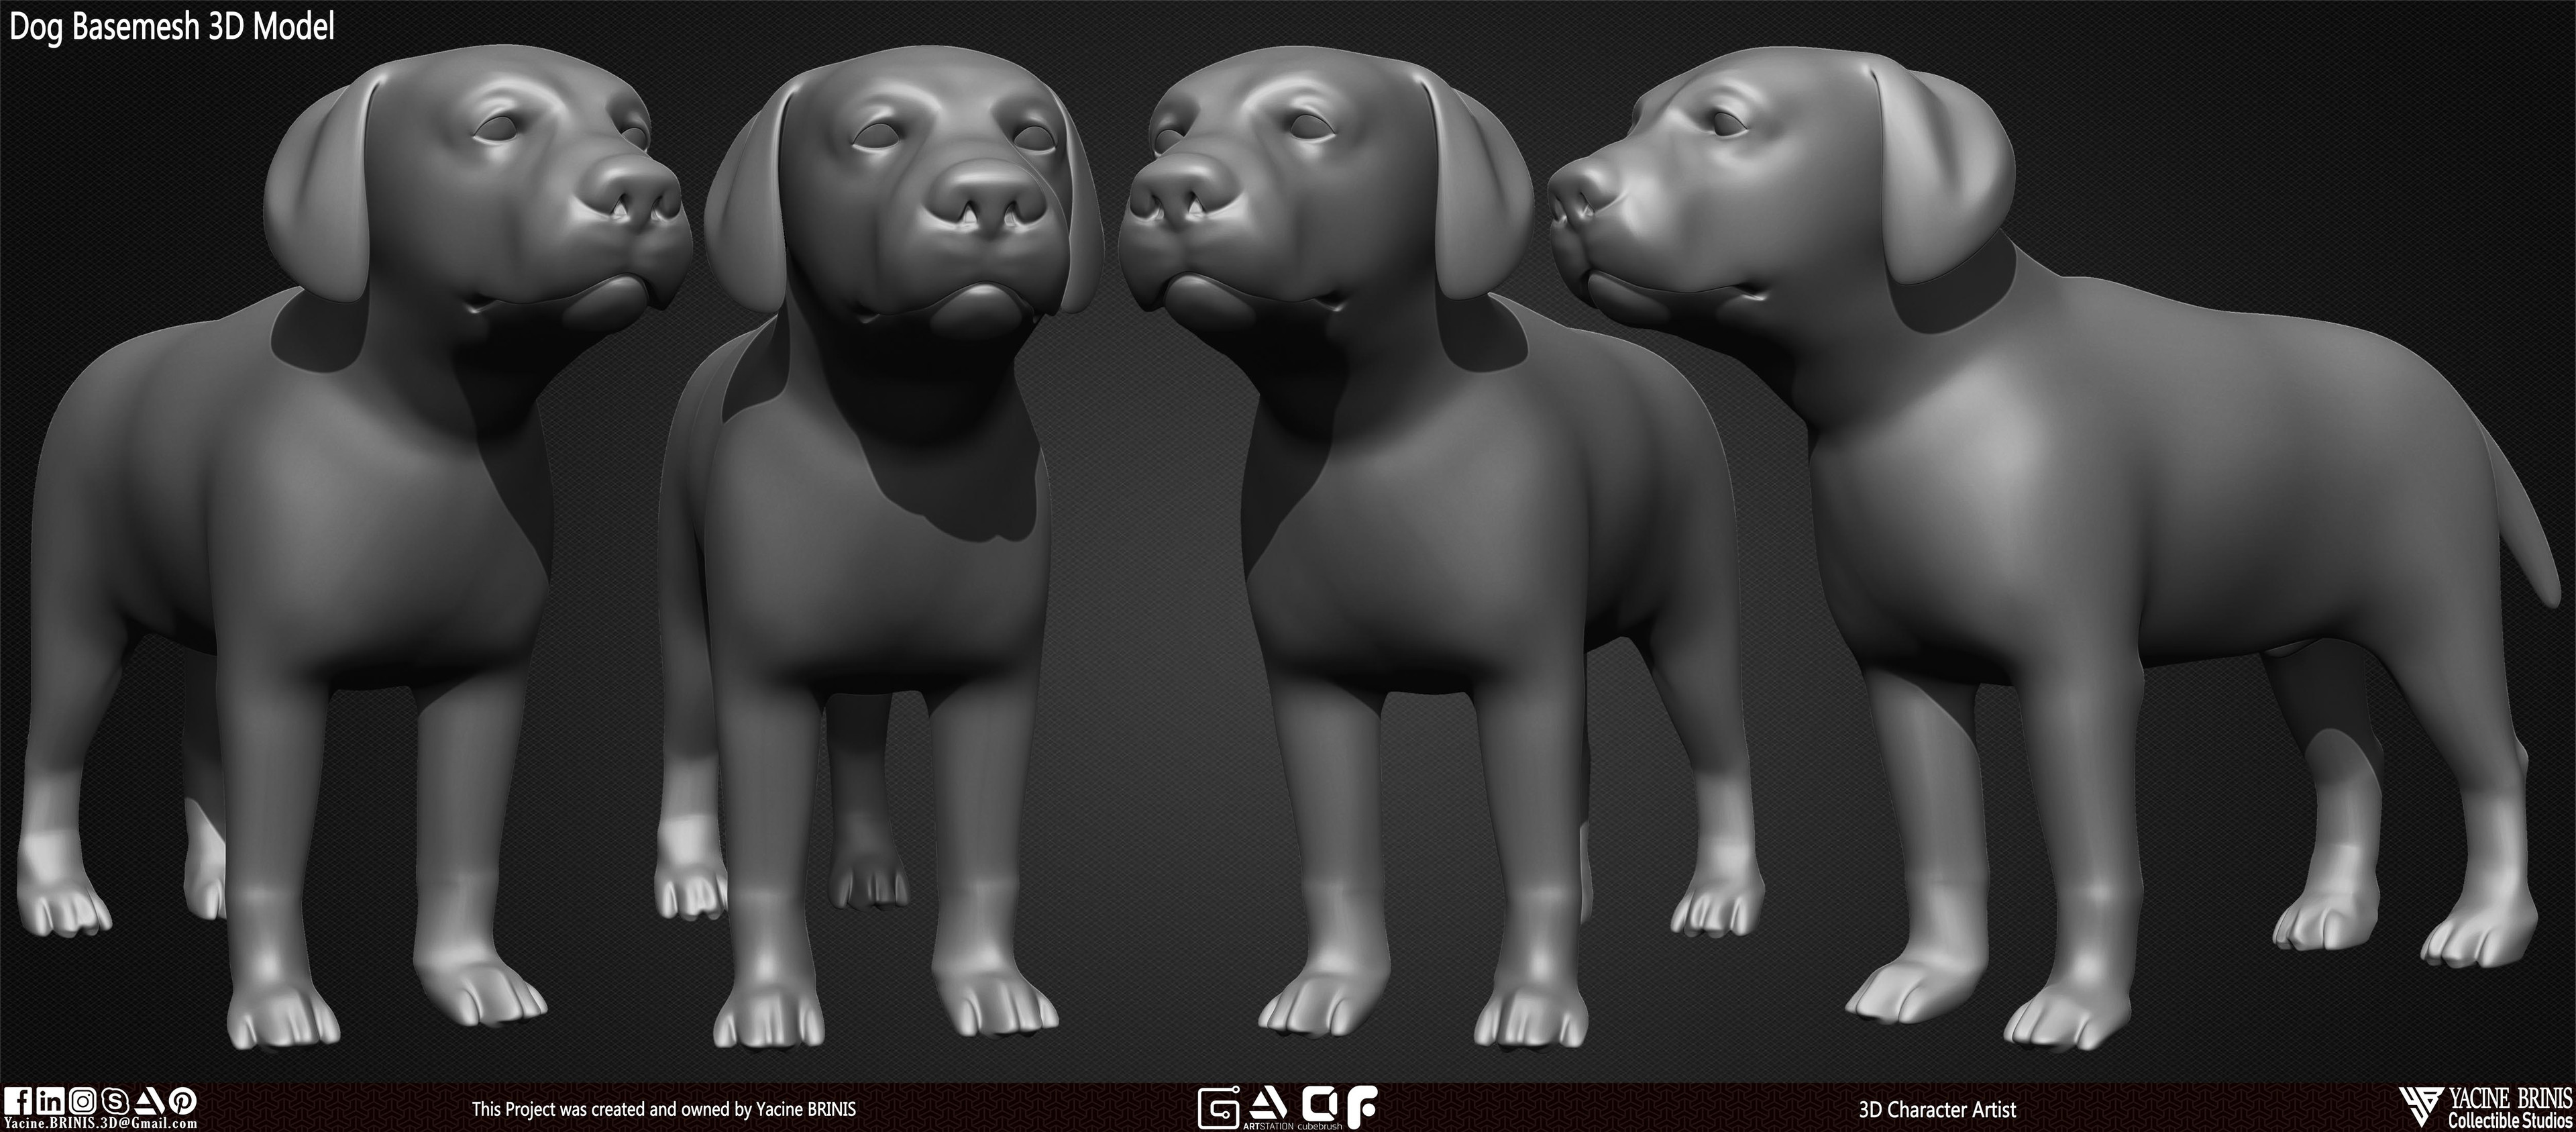 Dog Basemesh 3D Model Vol 01 sculpted By Yacine BRINIS Set 001